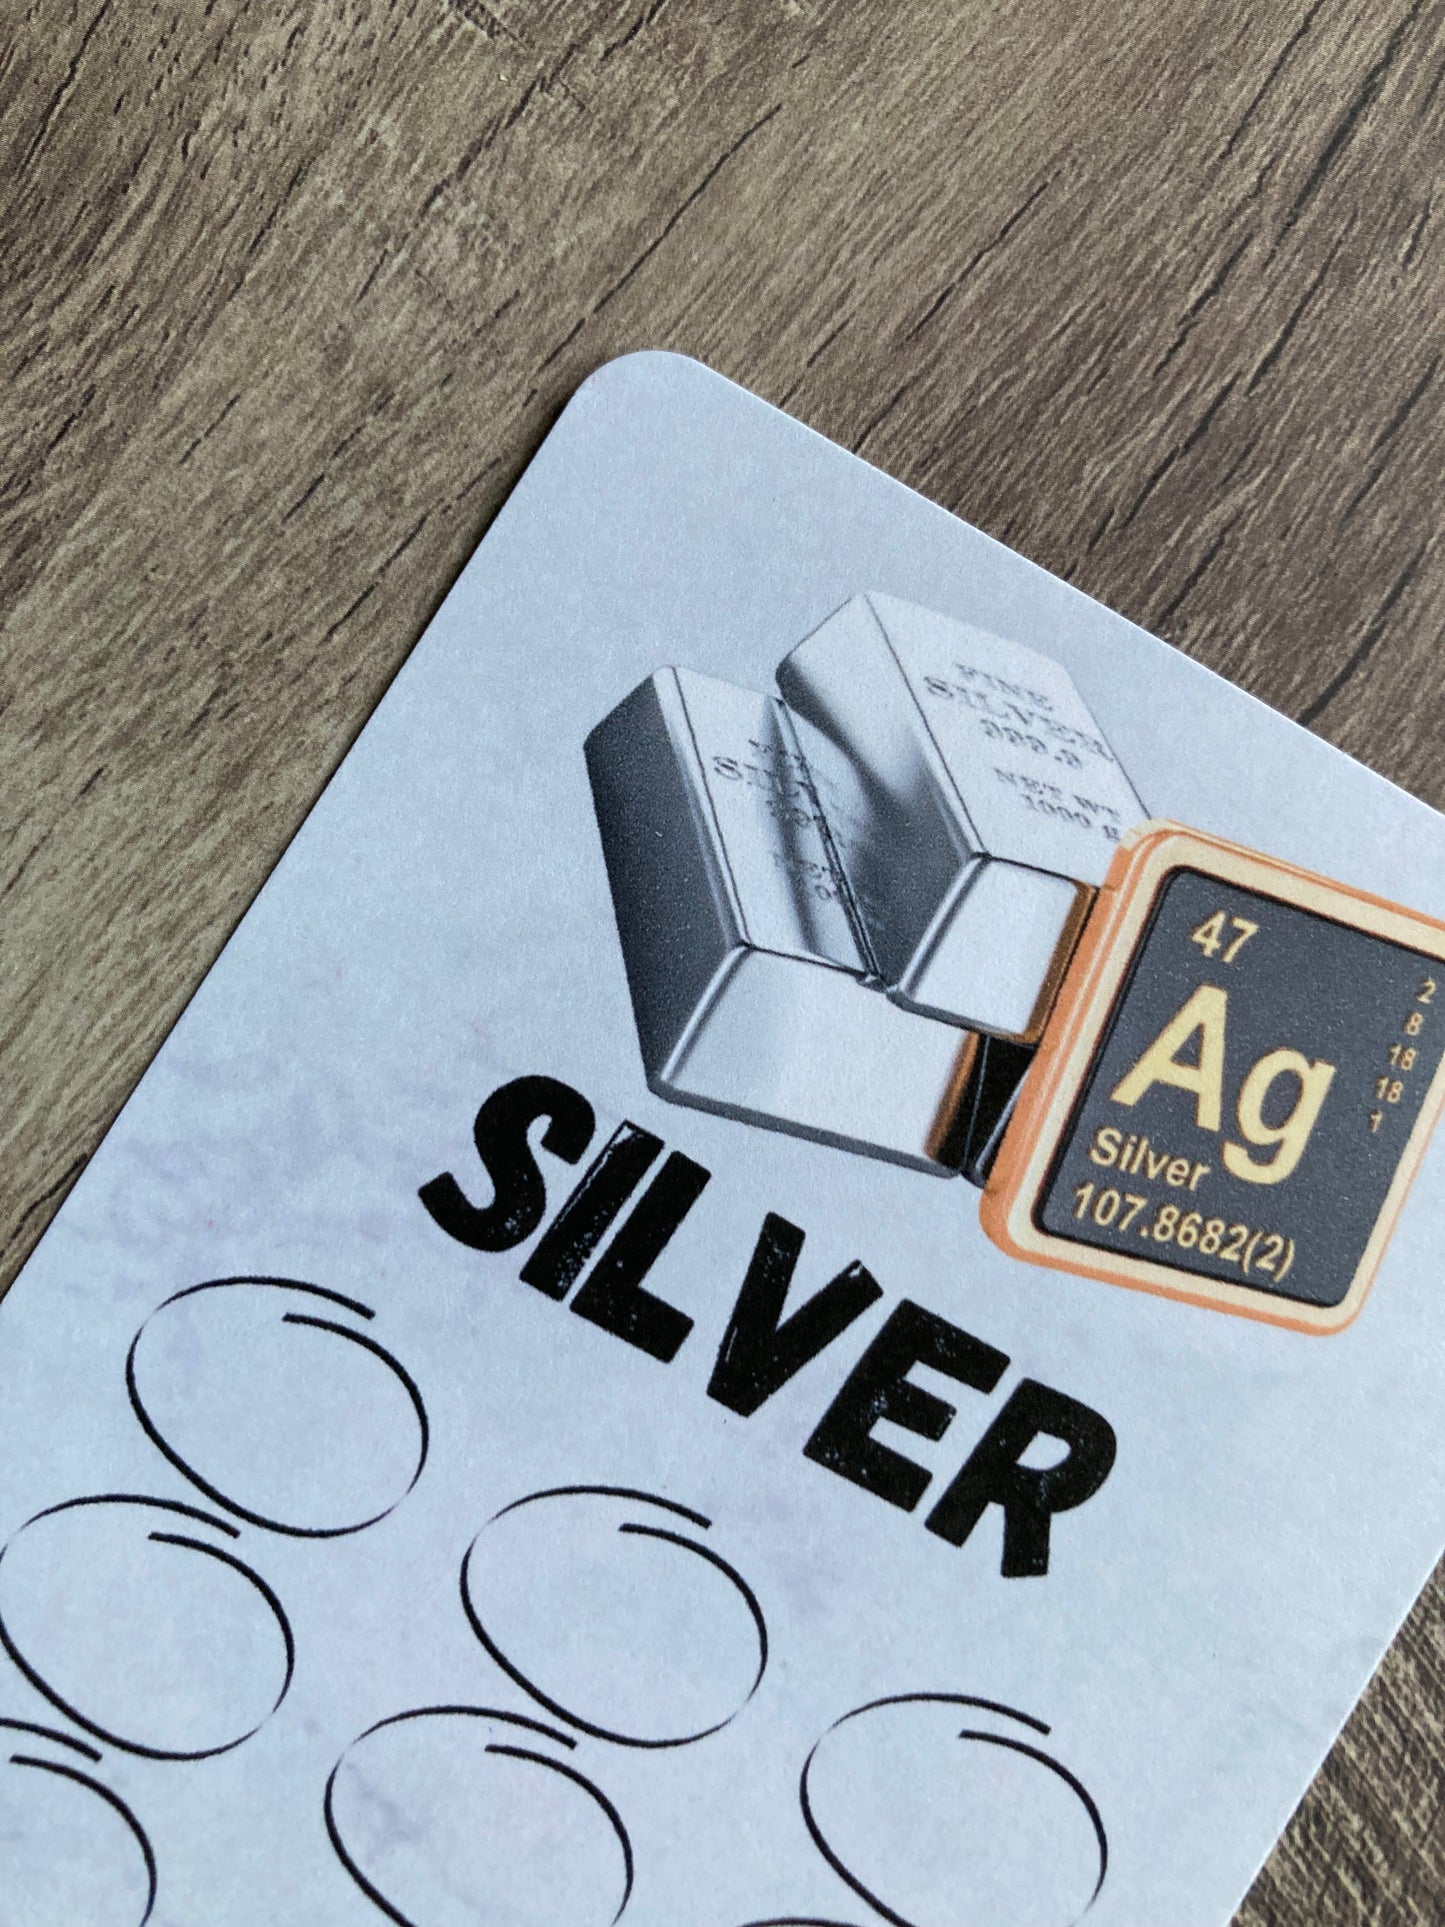 Saving challenge “silver”